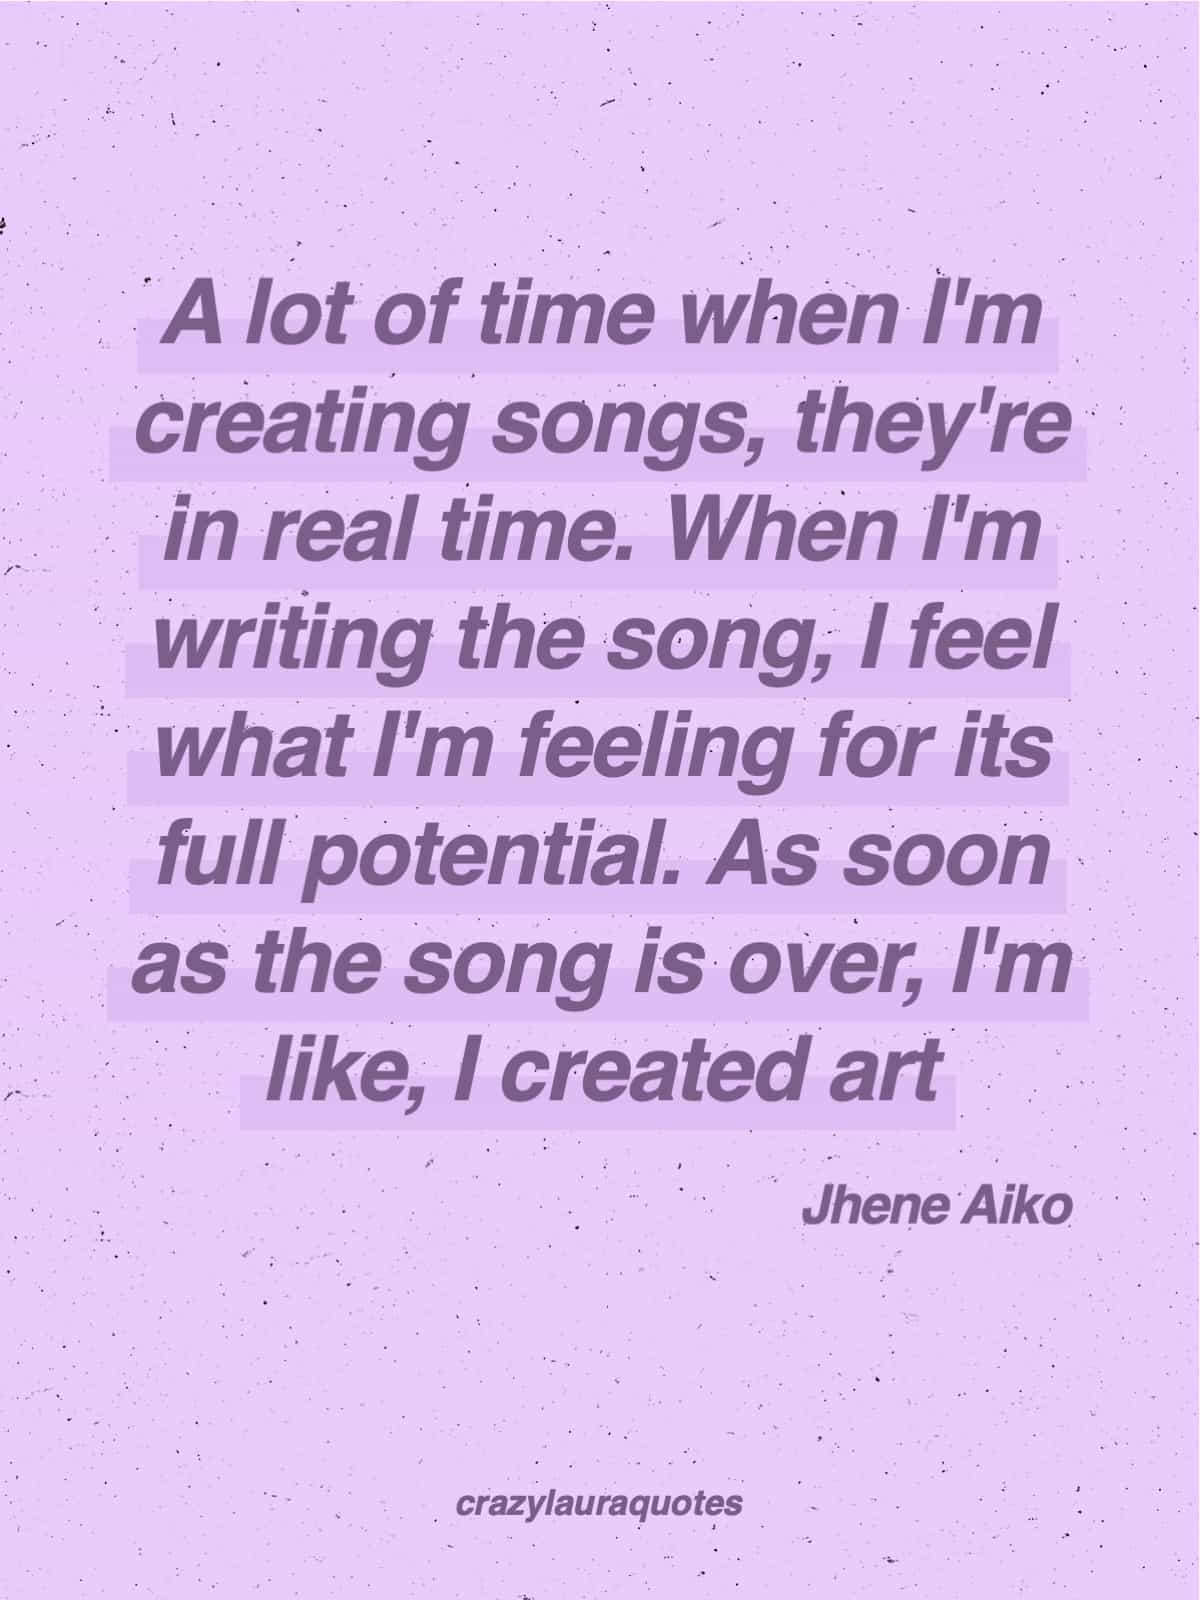 creating music is art jhene quote